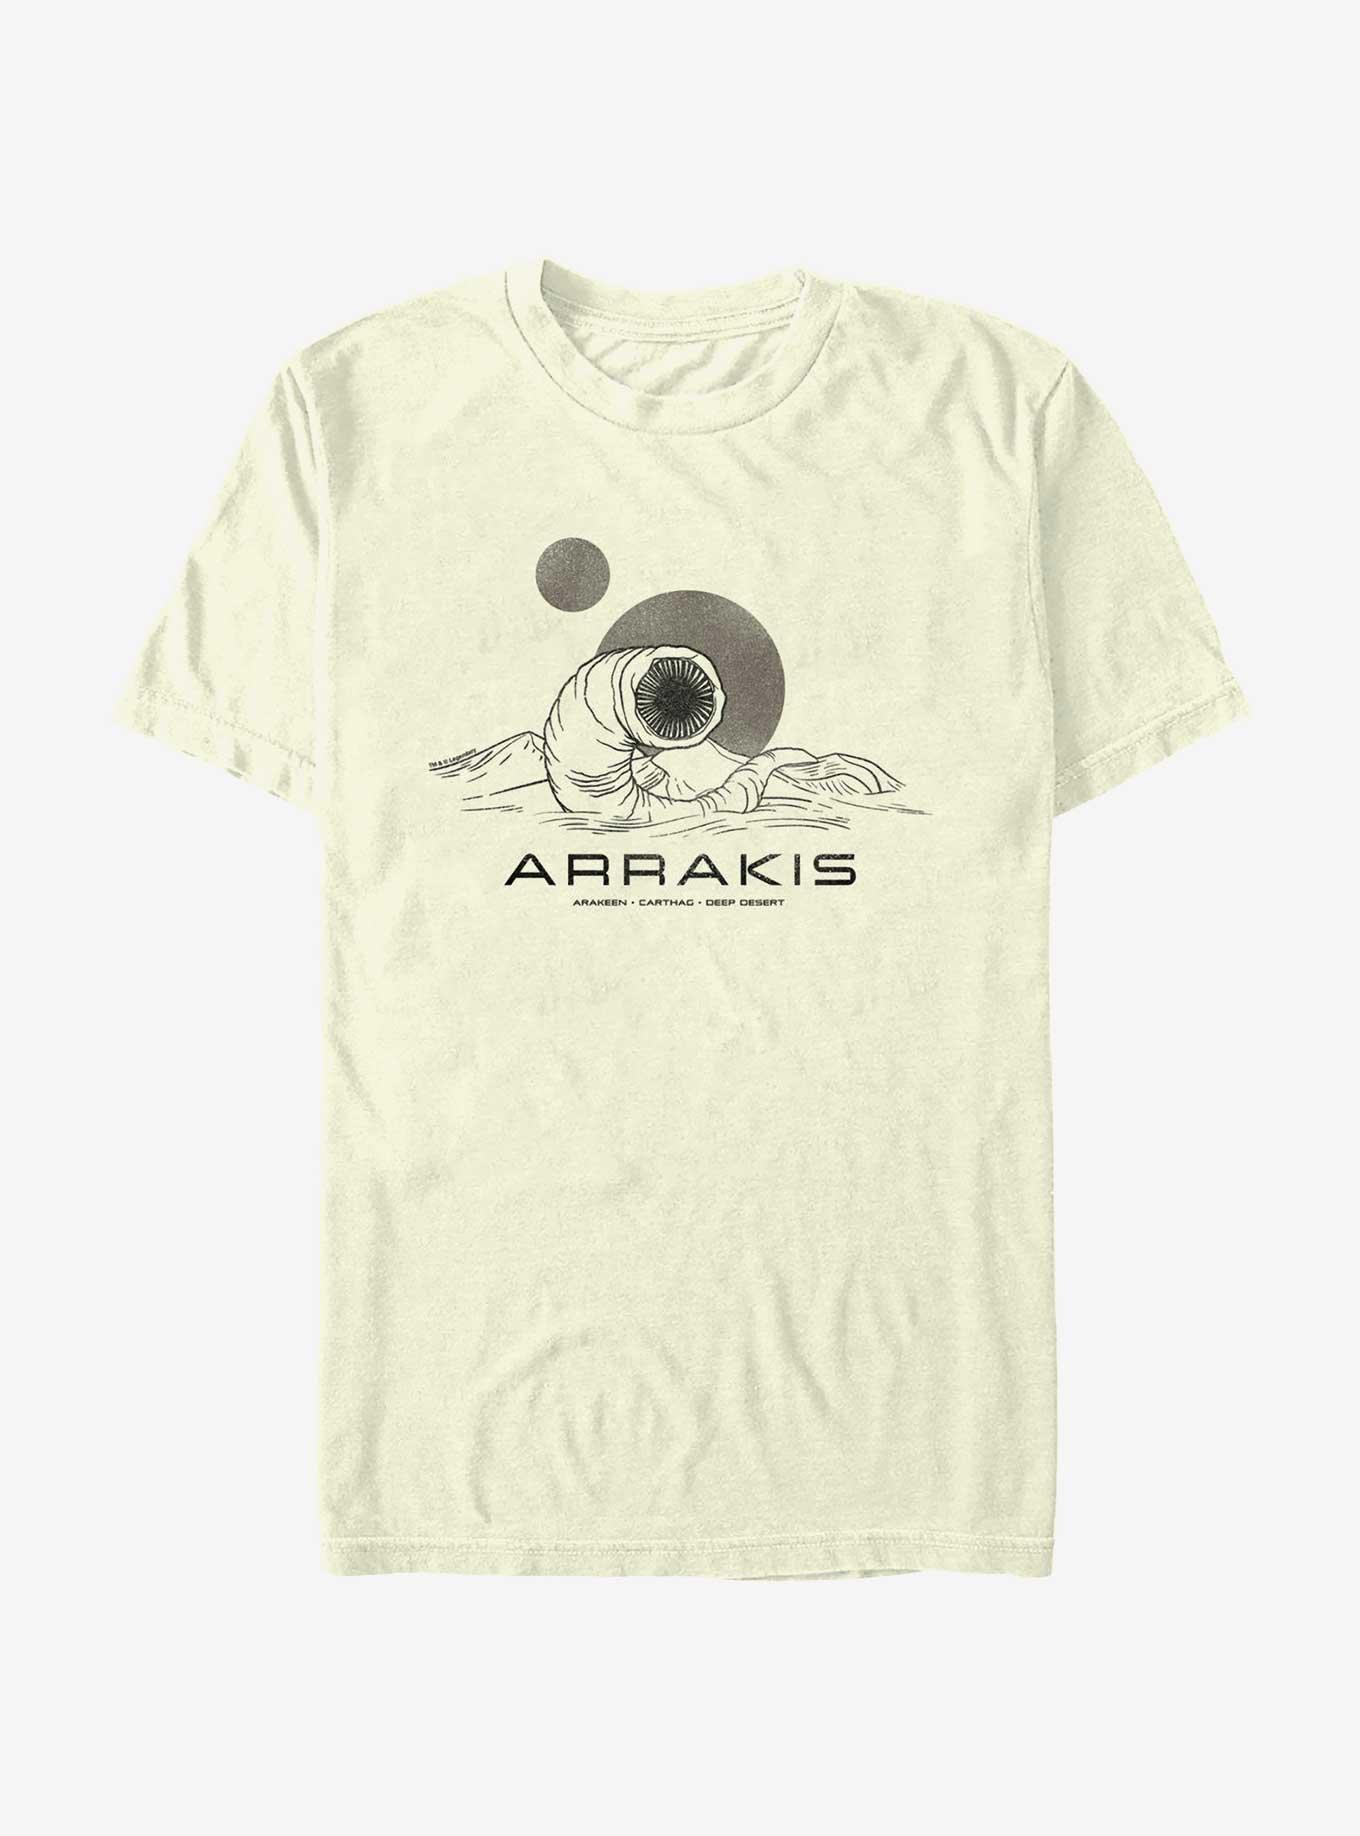 Dune: Part Two Arrakis Worm T-Shirt, NATURAL, hi-res